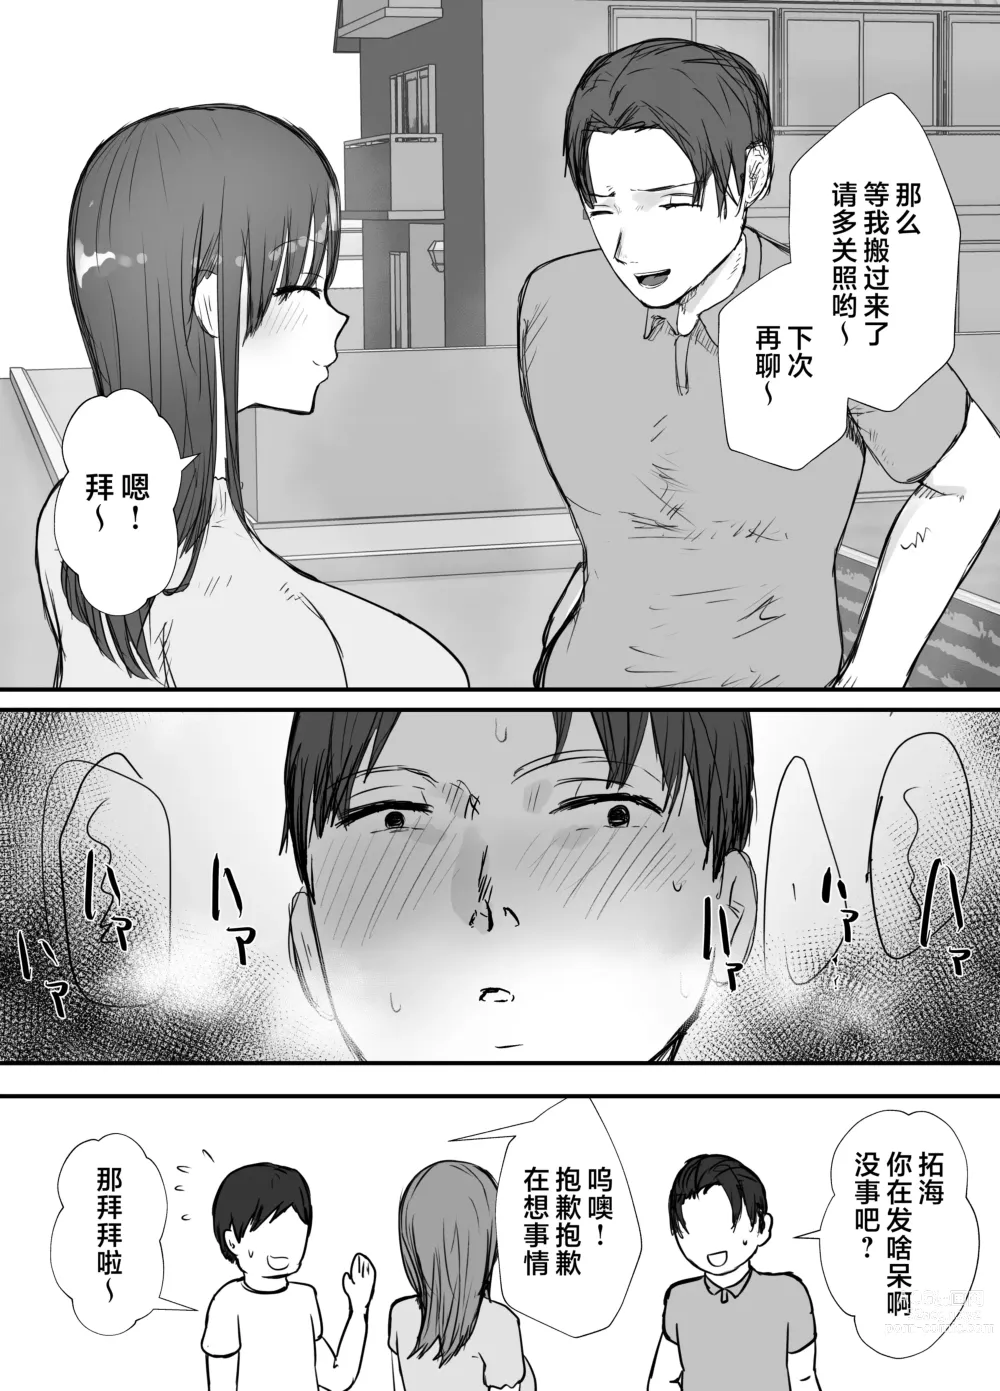 Page 10 of doujinshi 戴绿帽后悔似乎已经迟了哟?3